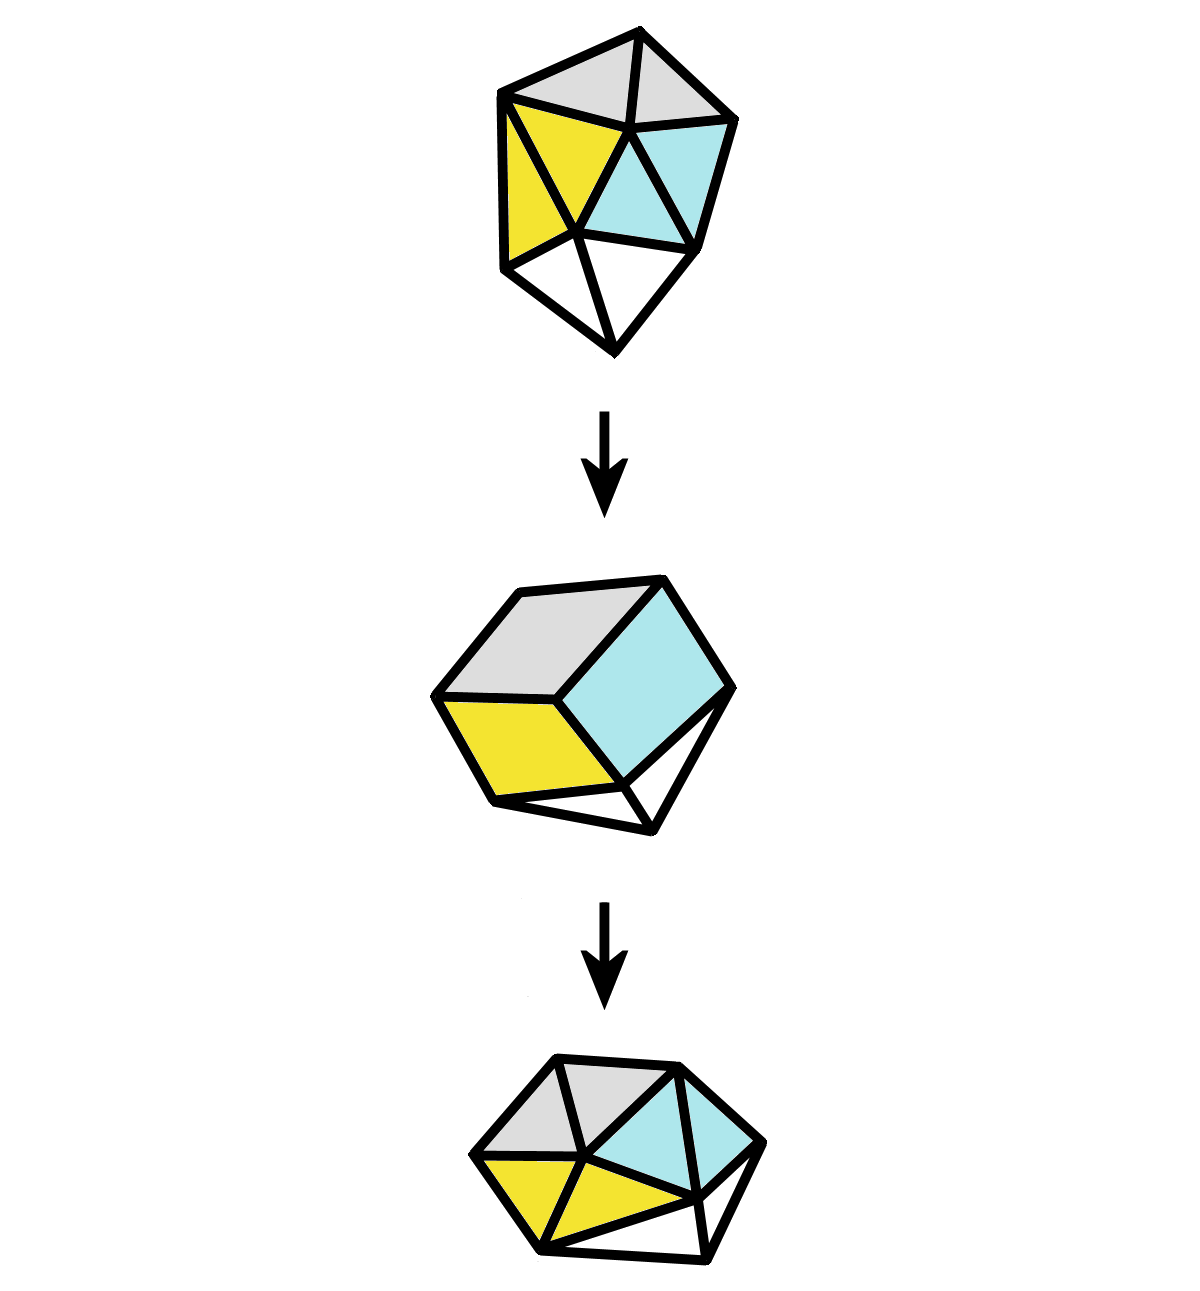 Diamond-square-diamond rearrangement